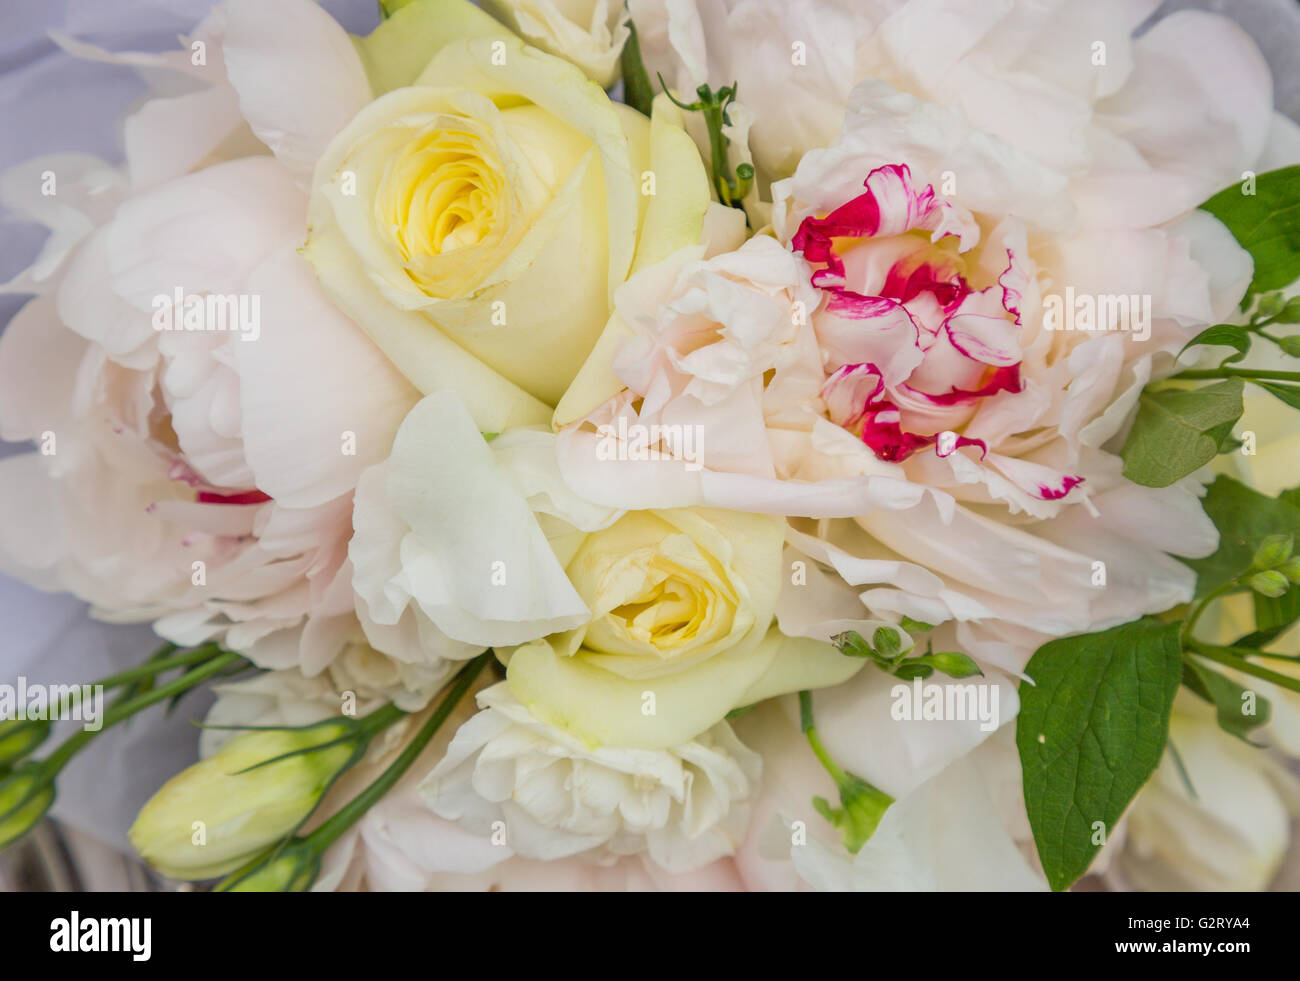 fresh cut flowers in an arrangement Stock Photo